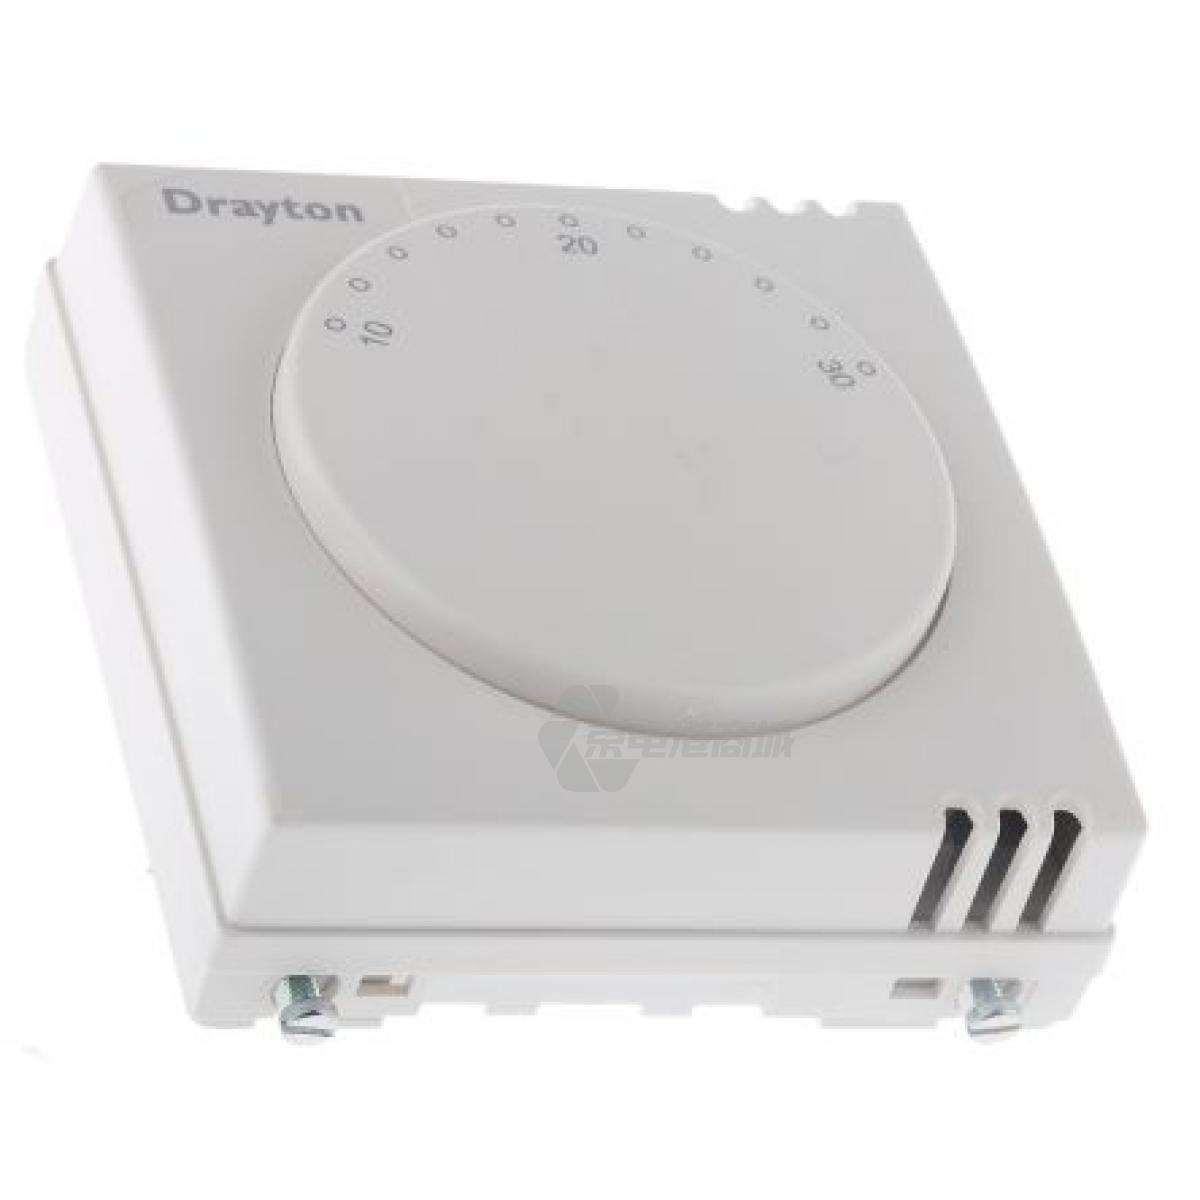 Drayton 1 A/2 A SPDT开关 机械式暖通空调恒温器 24014, 230 V 交流电源,  10 -  30 °C